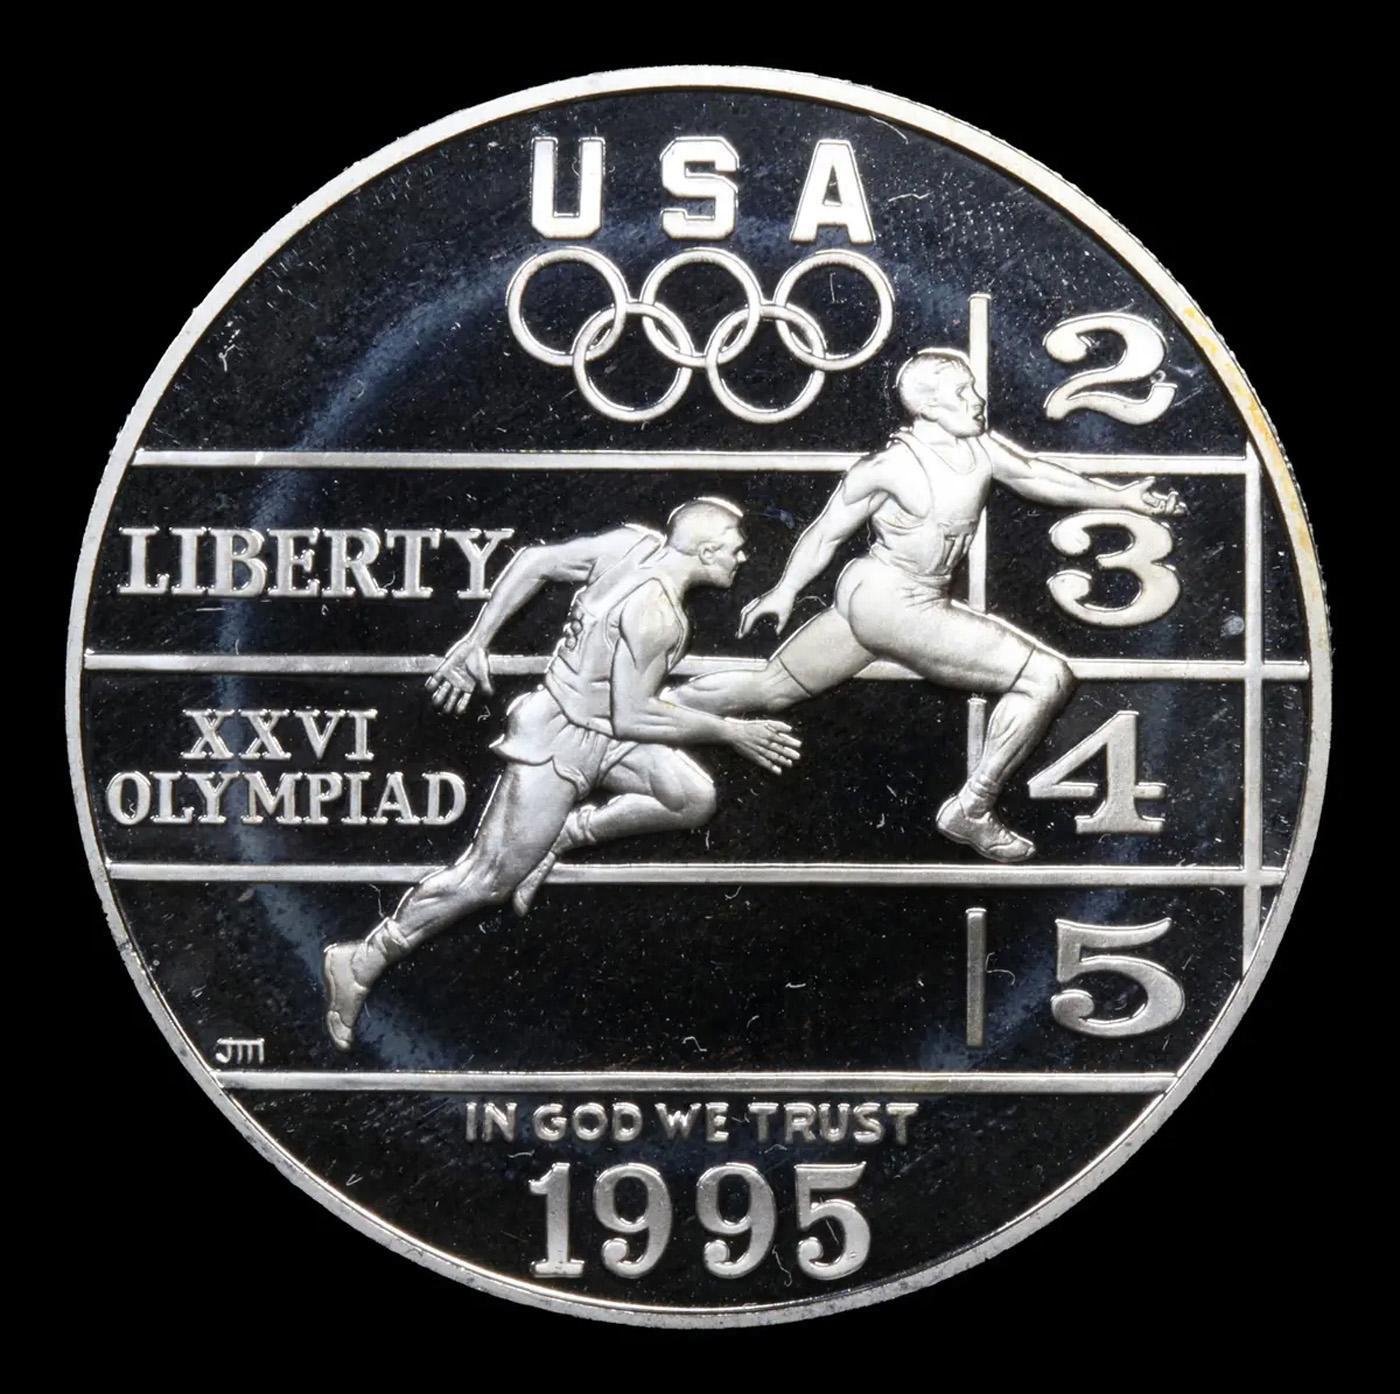 Proof 1995-P Olympics Track & Field Modern Commem Dollar 1 Grades GEM++ Proof Deep Cameo